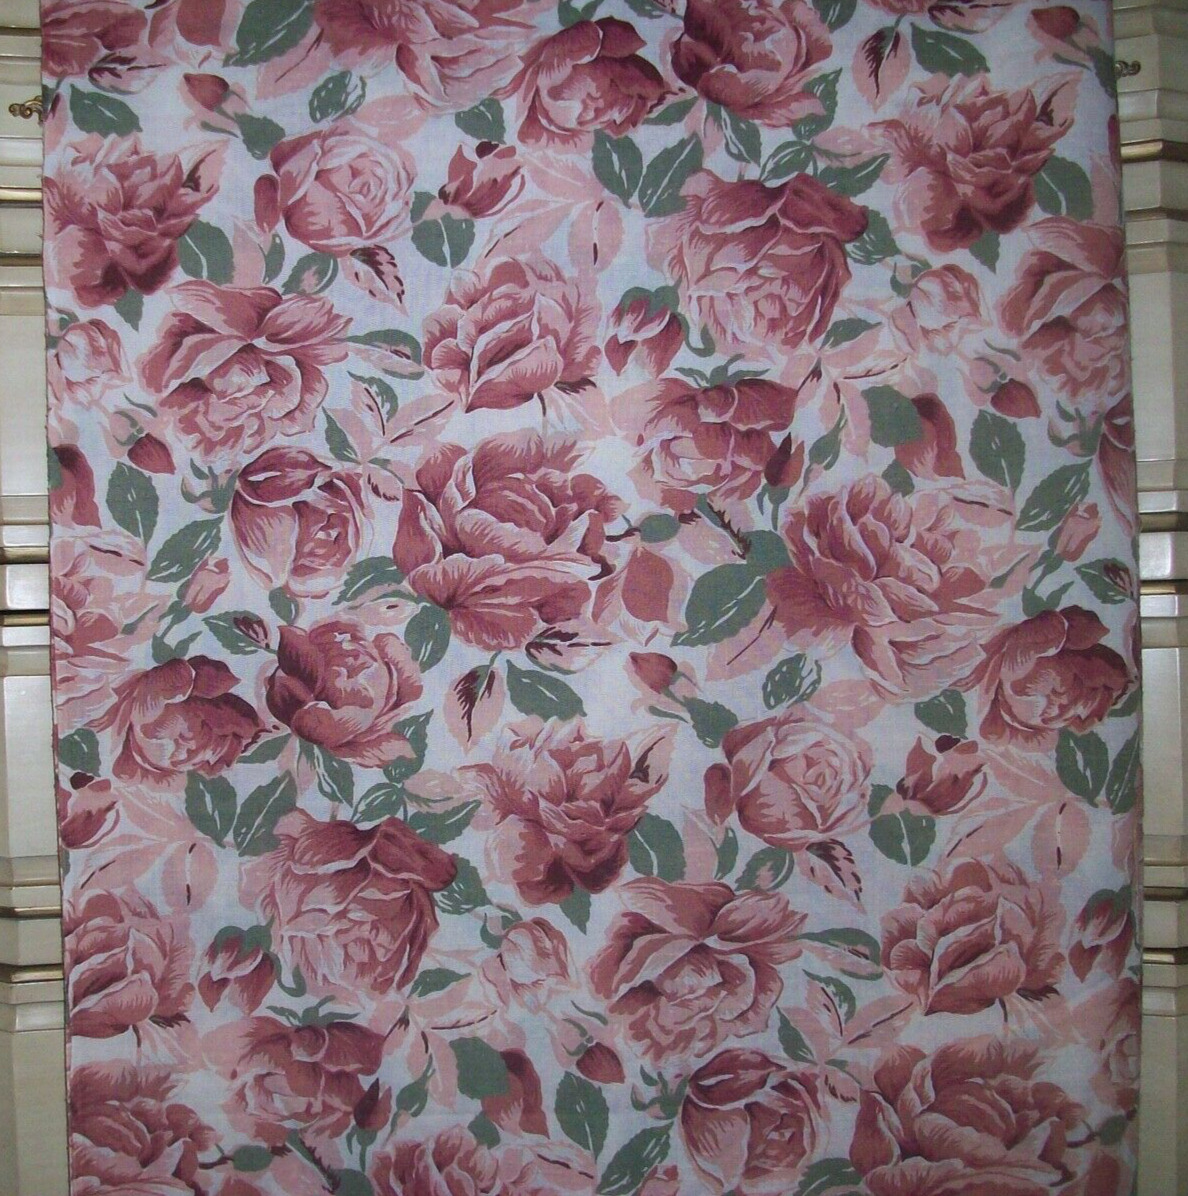 Vintage Large Pink Floral Cotton Blend Semi-Sheer Slub-Textured Fabric 3 yards